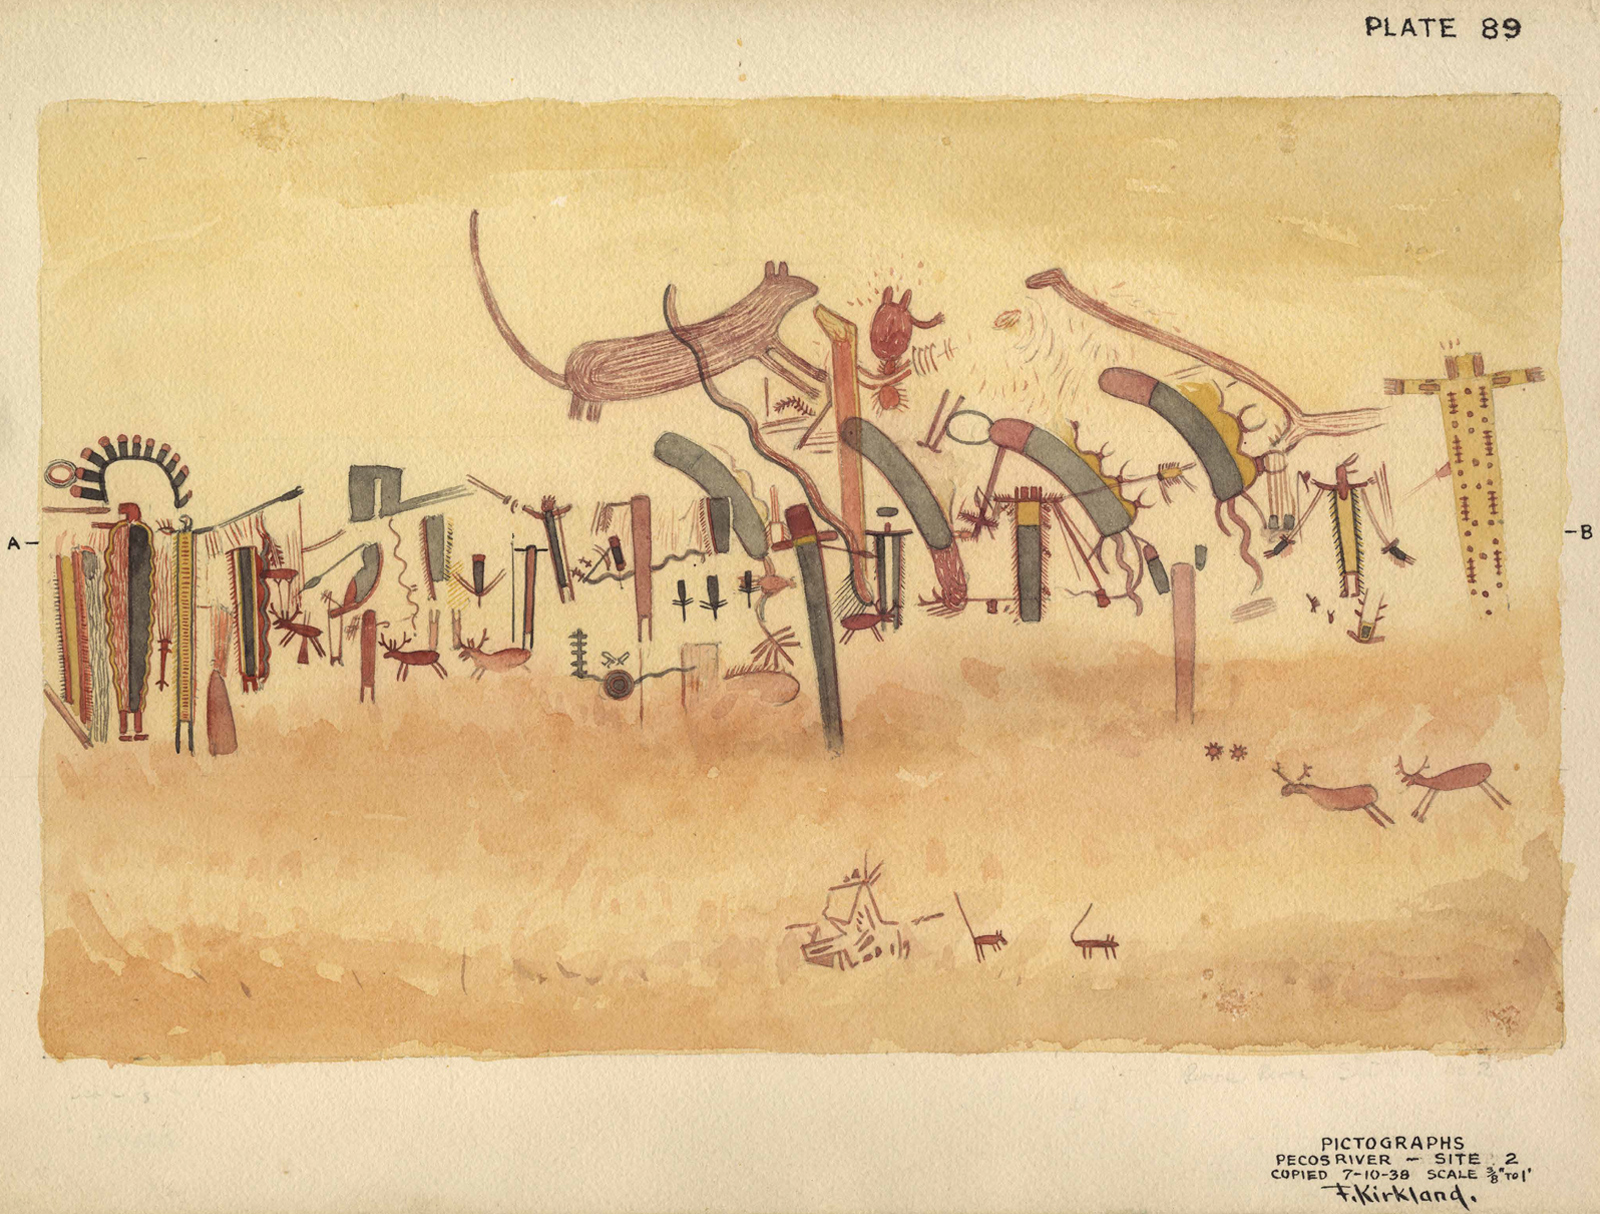 Kirkland’s watercolor reproduction of a site along the Pecos River